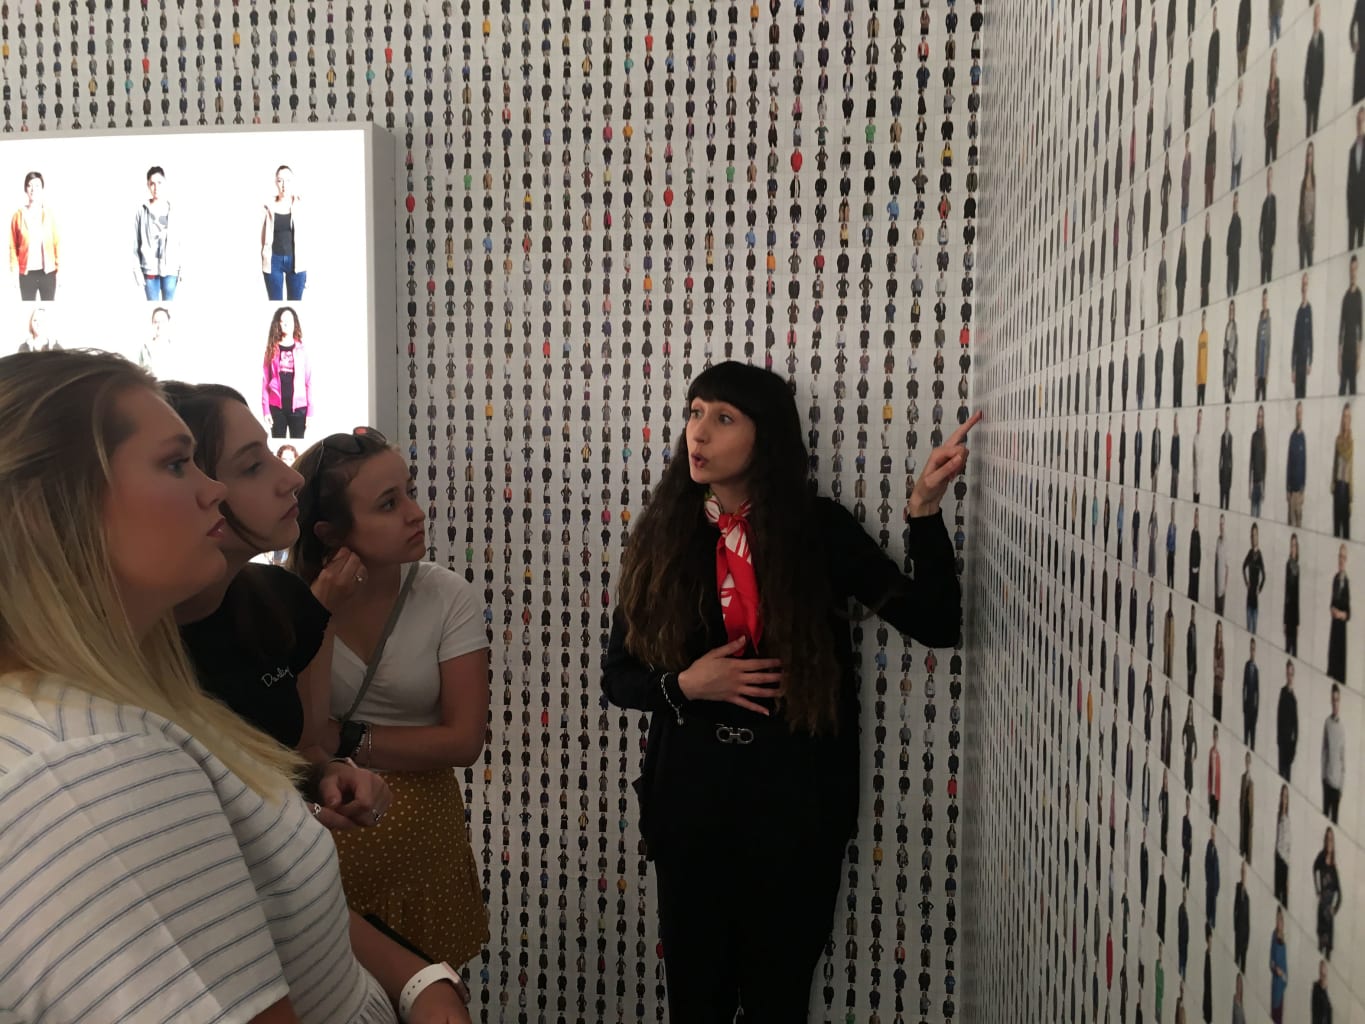 An art museum guide giving a tour.